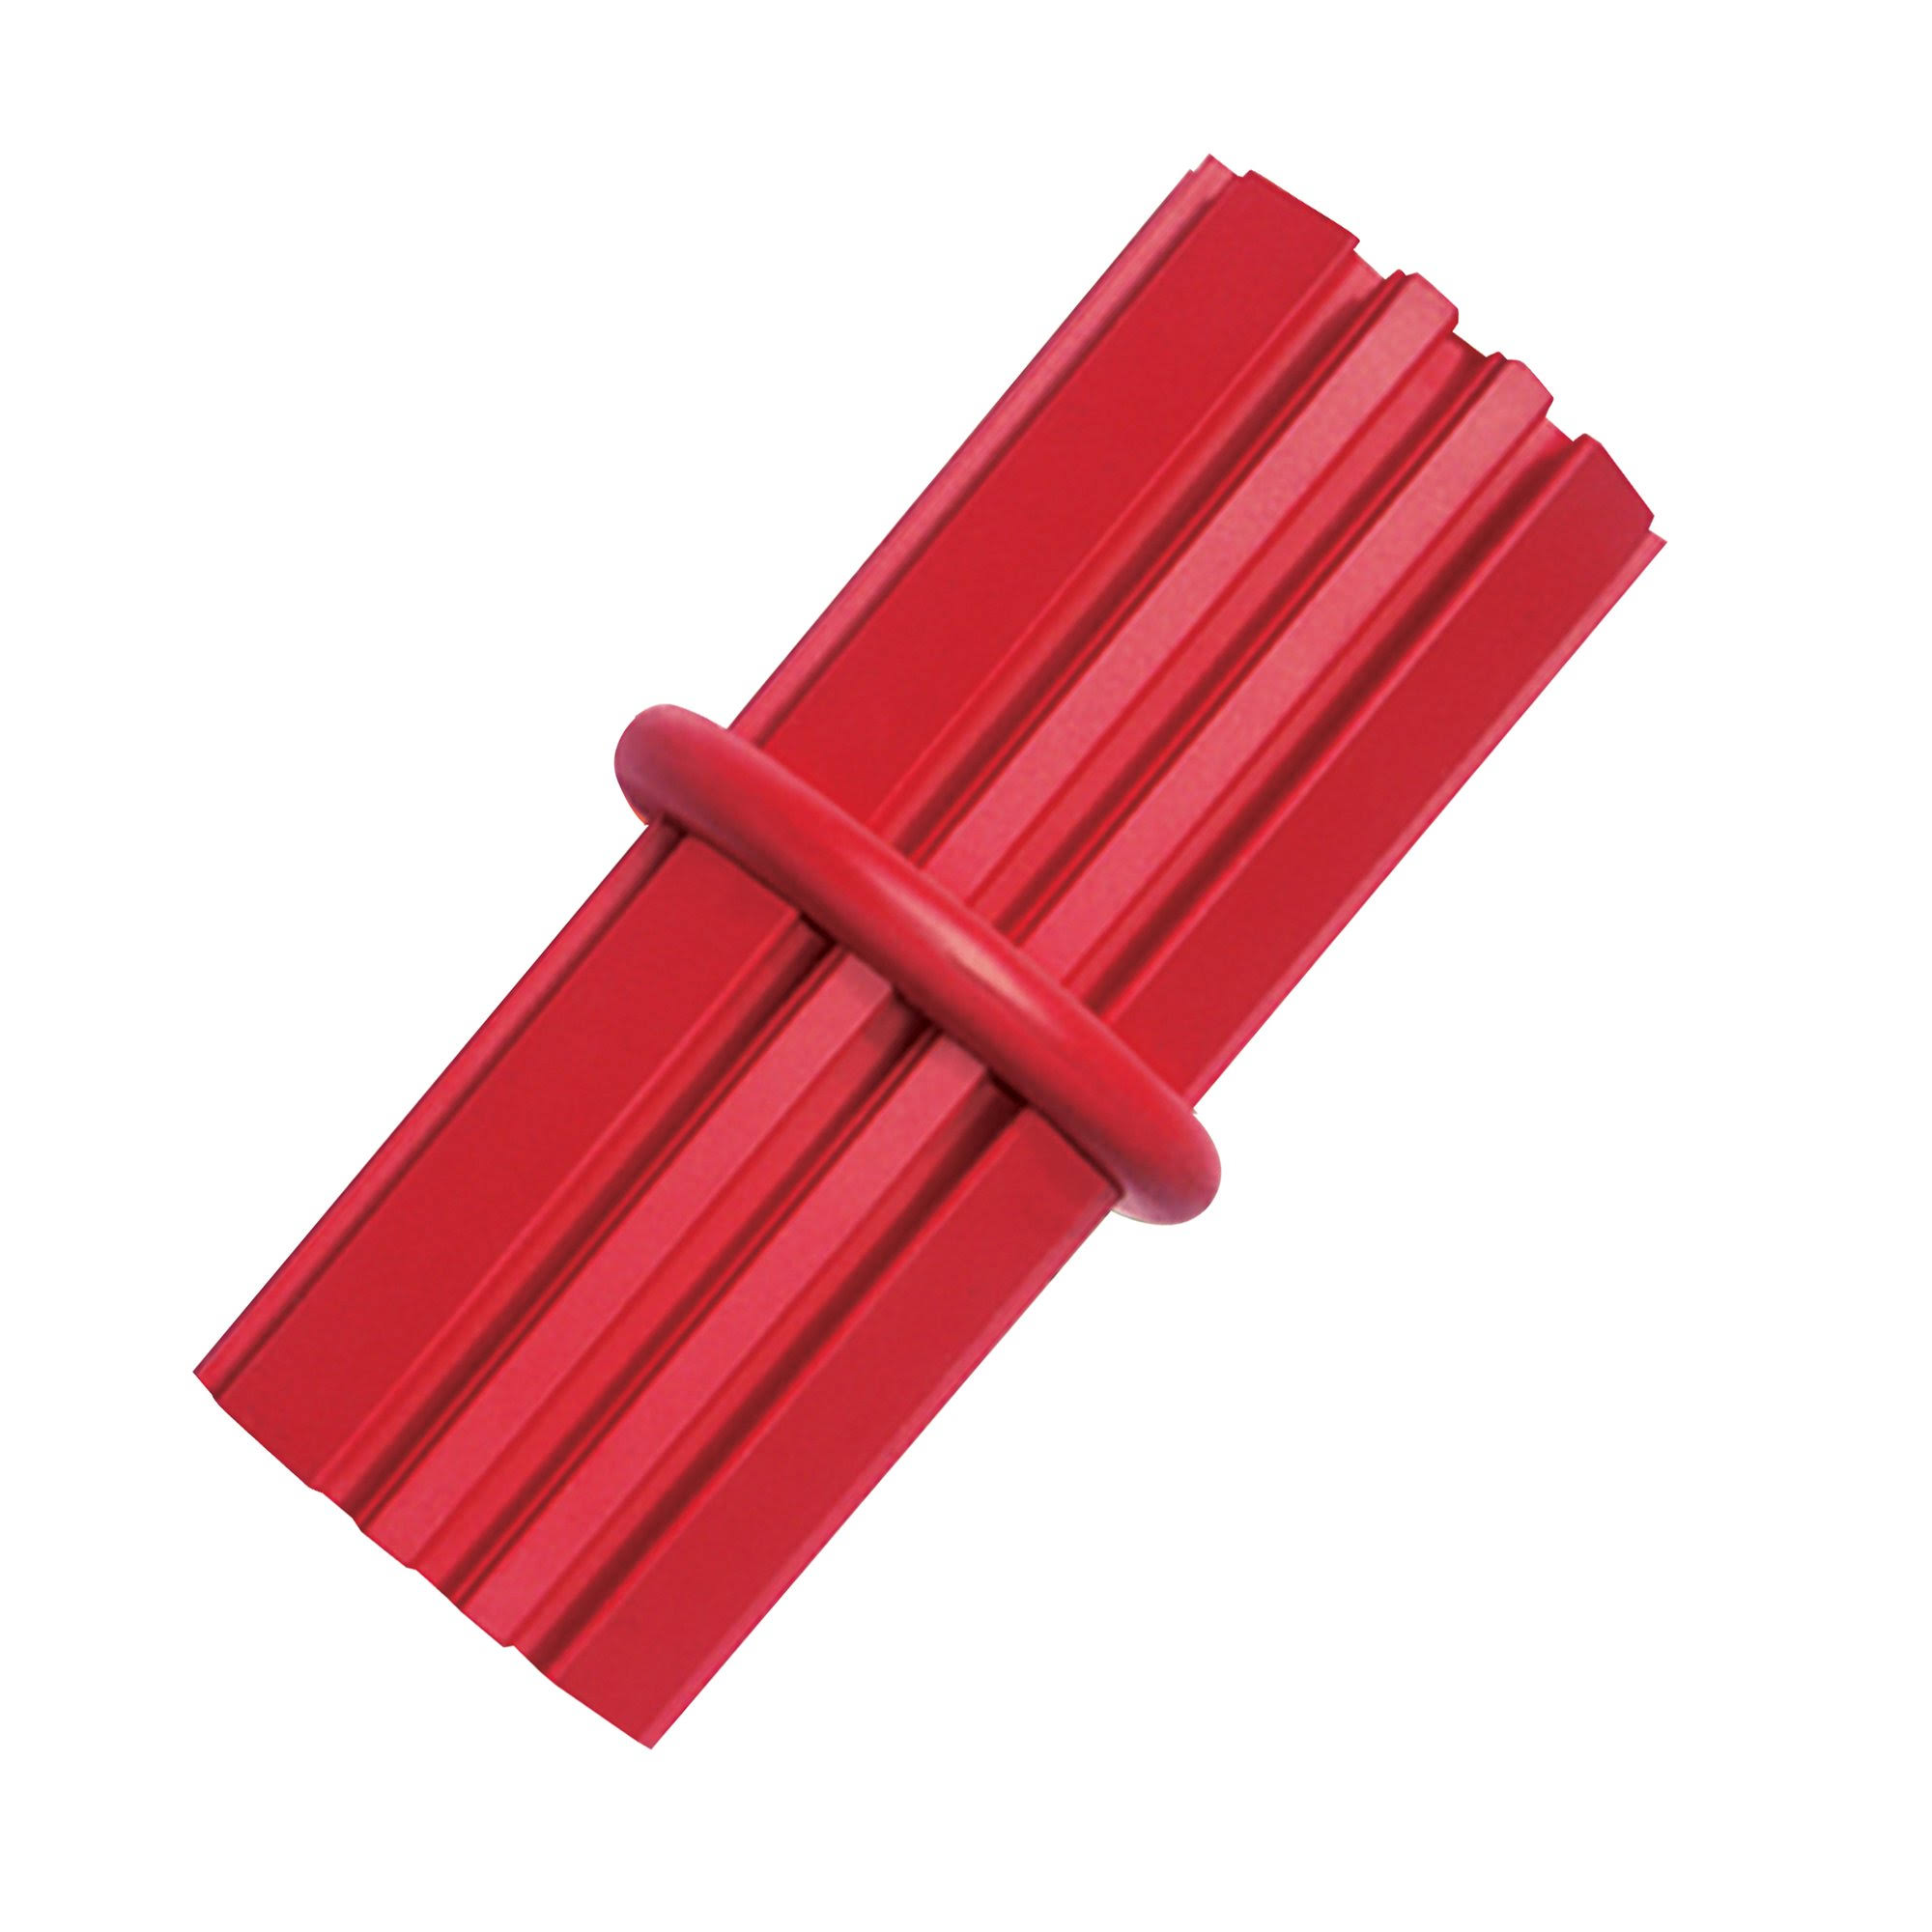 Kong Dental Stick Dog Toy - Red, Medium